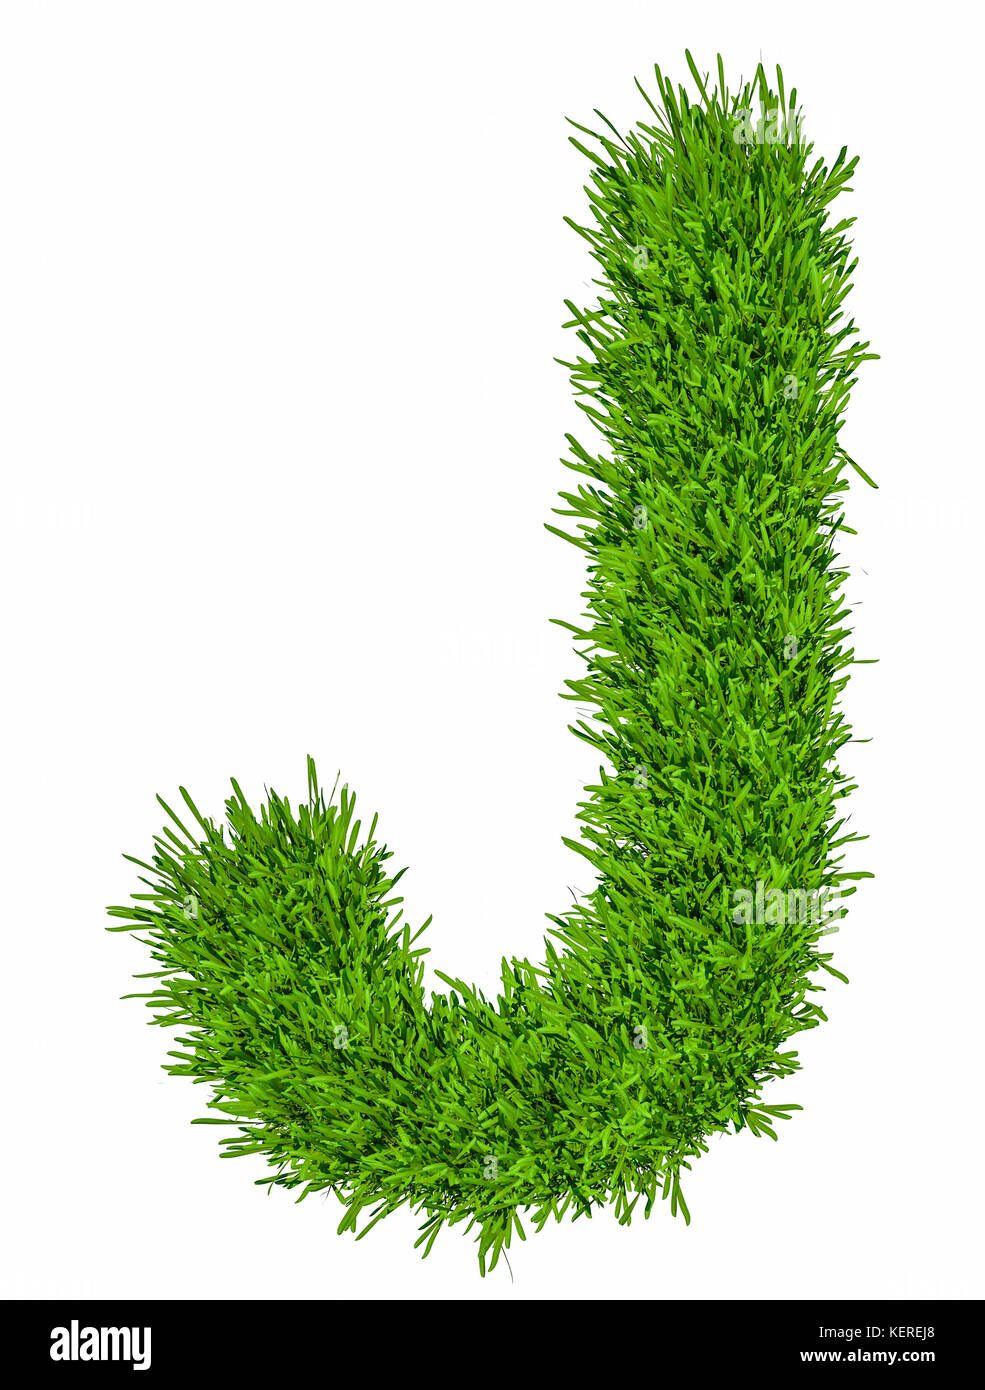 Letter of grass alphabet. 3d illustration Stock Photo - Alamy